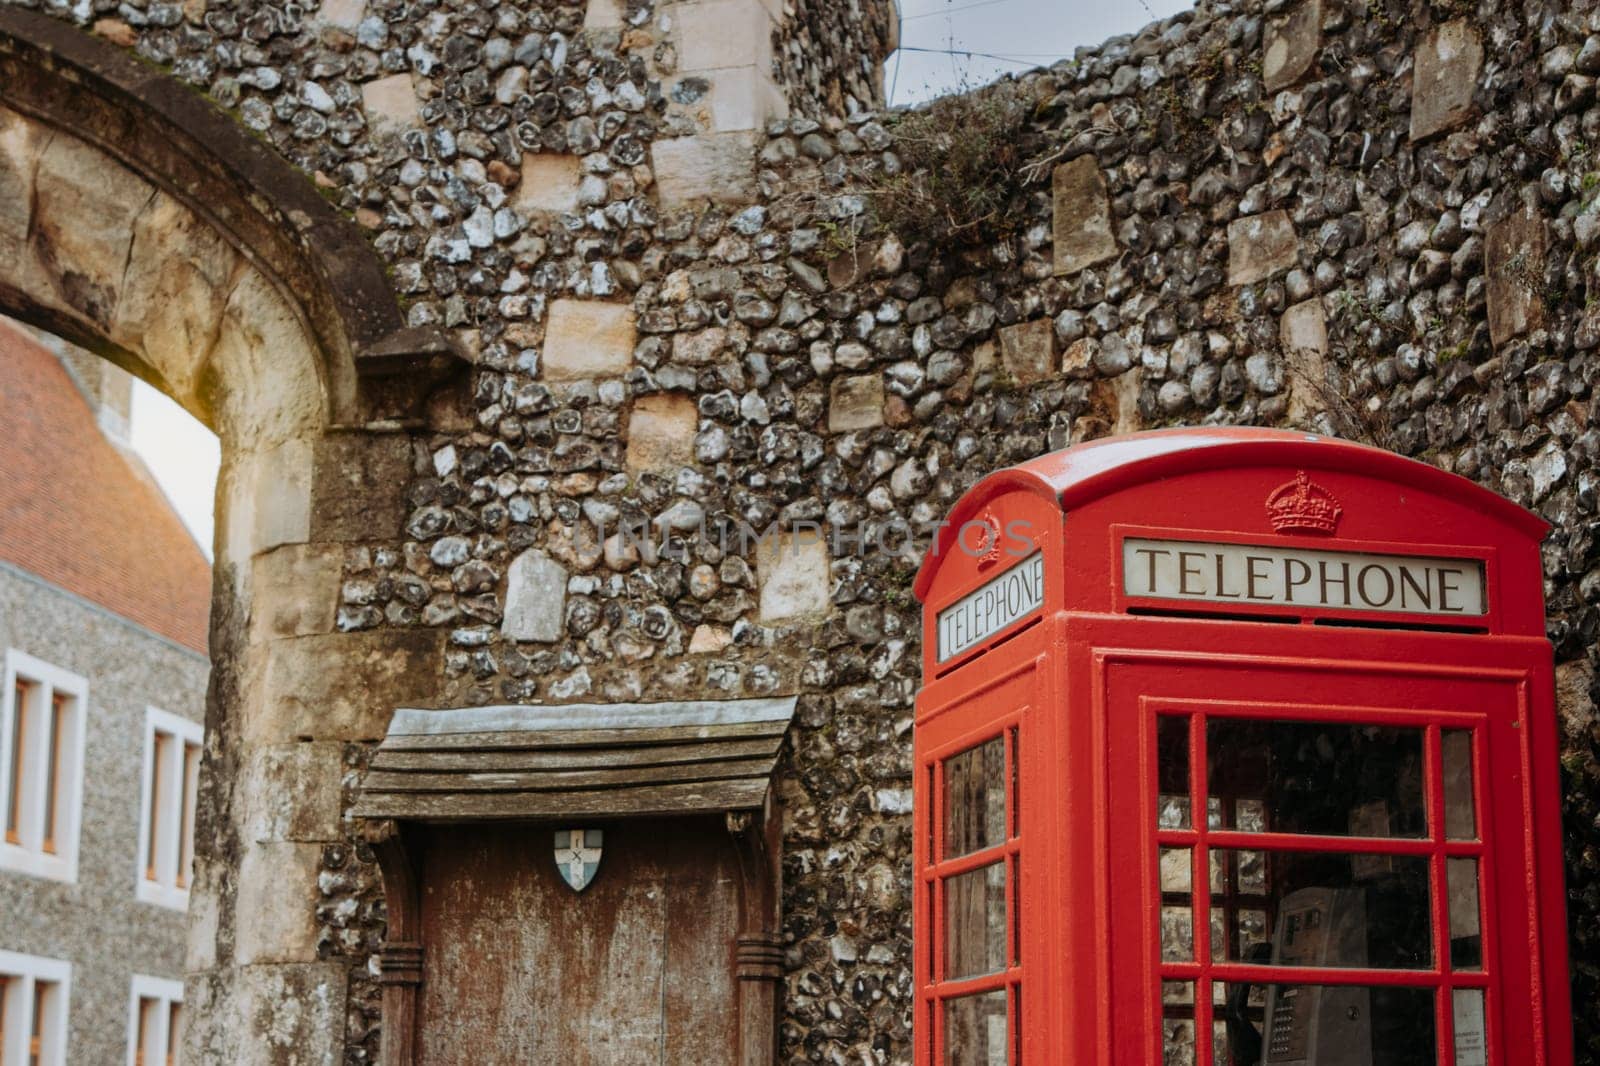 The iconic british telephone box by Suteren